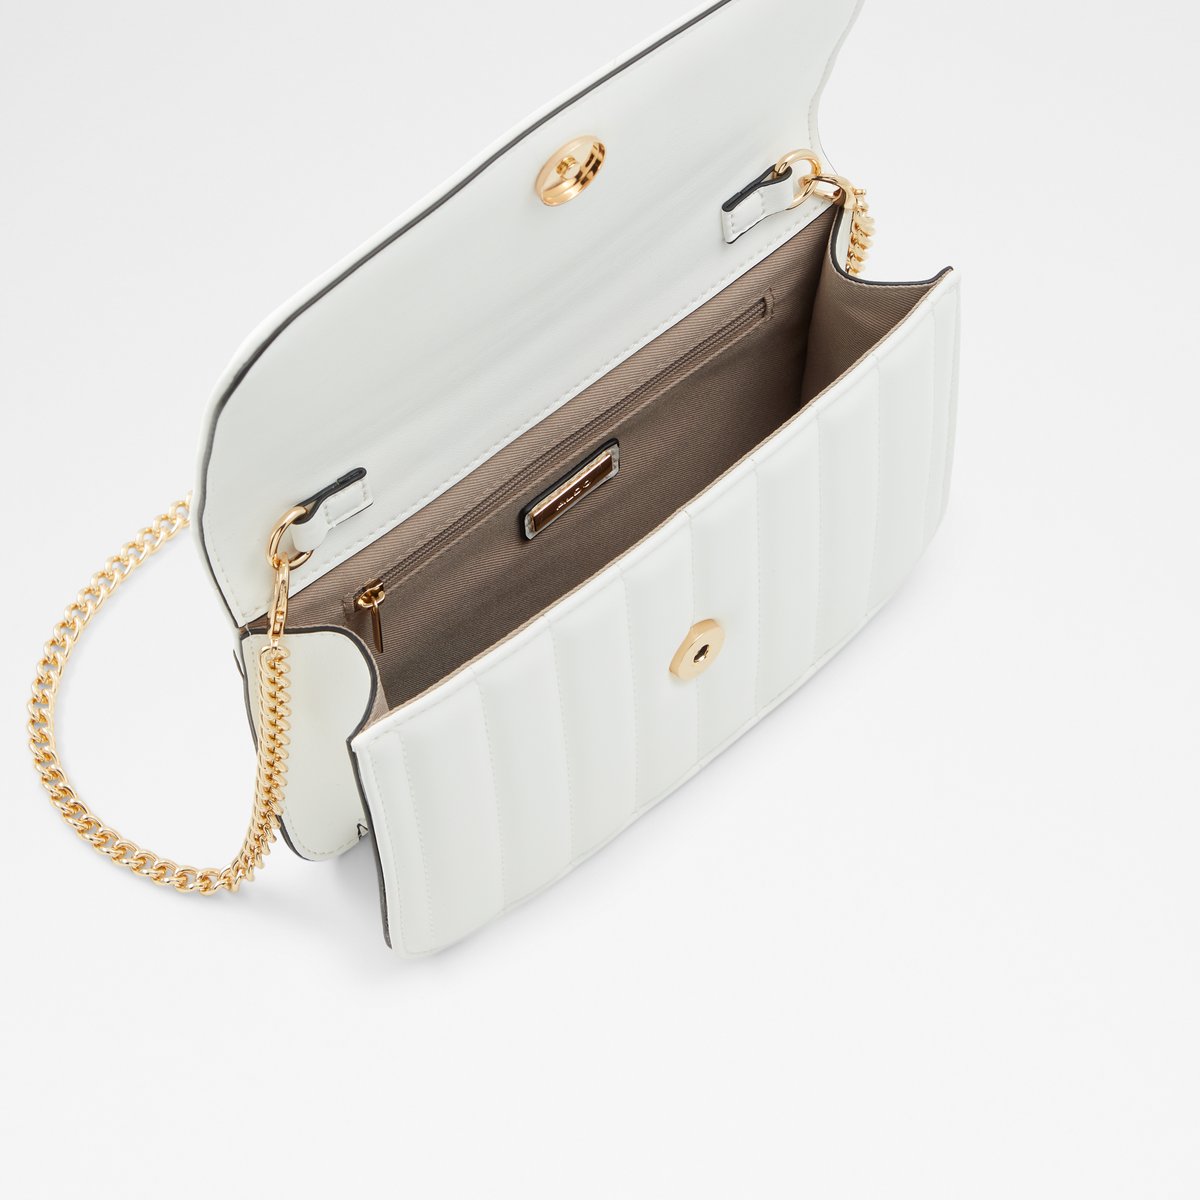 The Essential Dispensable Handbag: Aldo Frattapolesine - Lollipuff